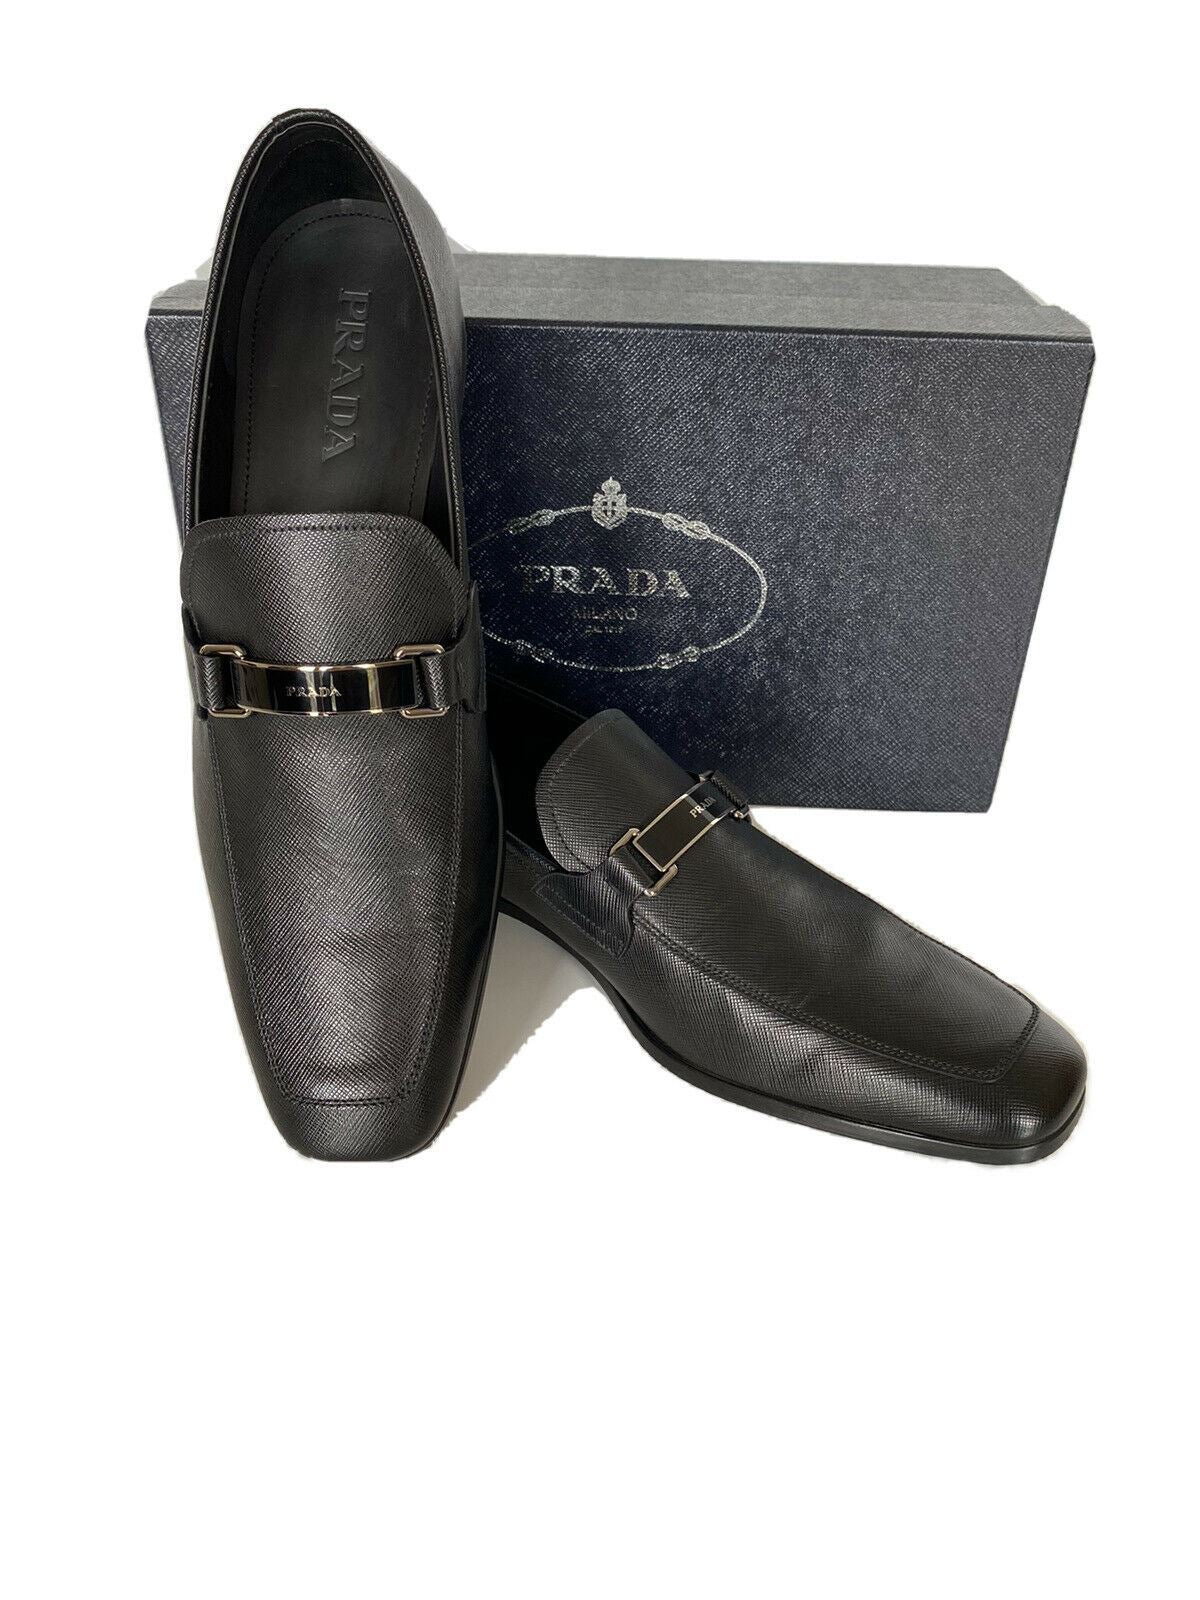 NIB PRADA Men's Black Leather Shoes 12 US (Prada 11) 2DC135 Italy